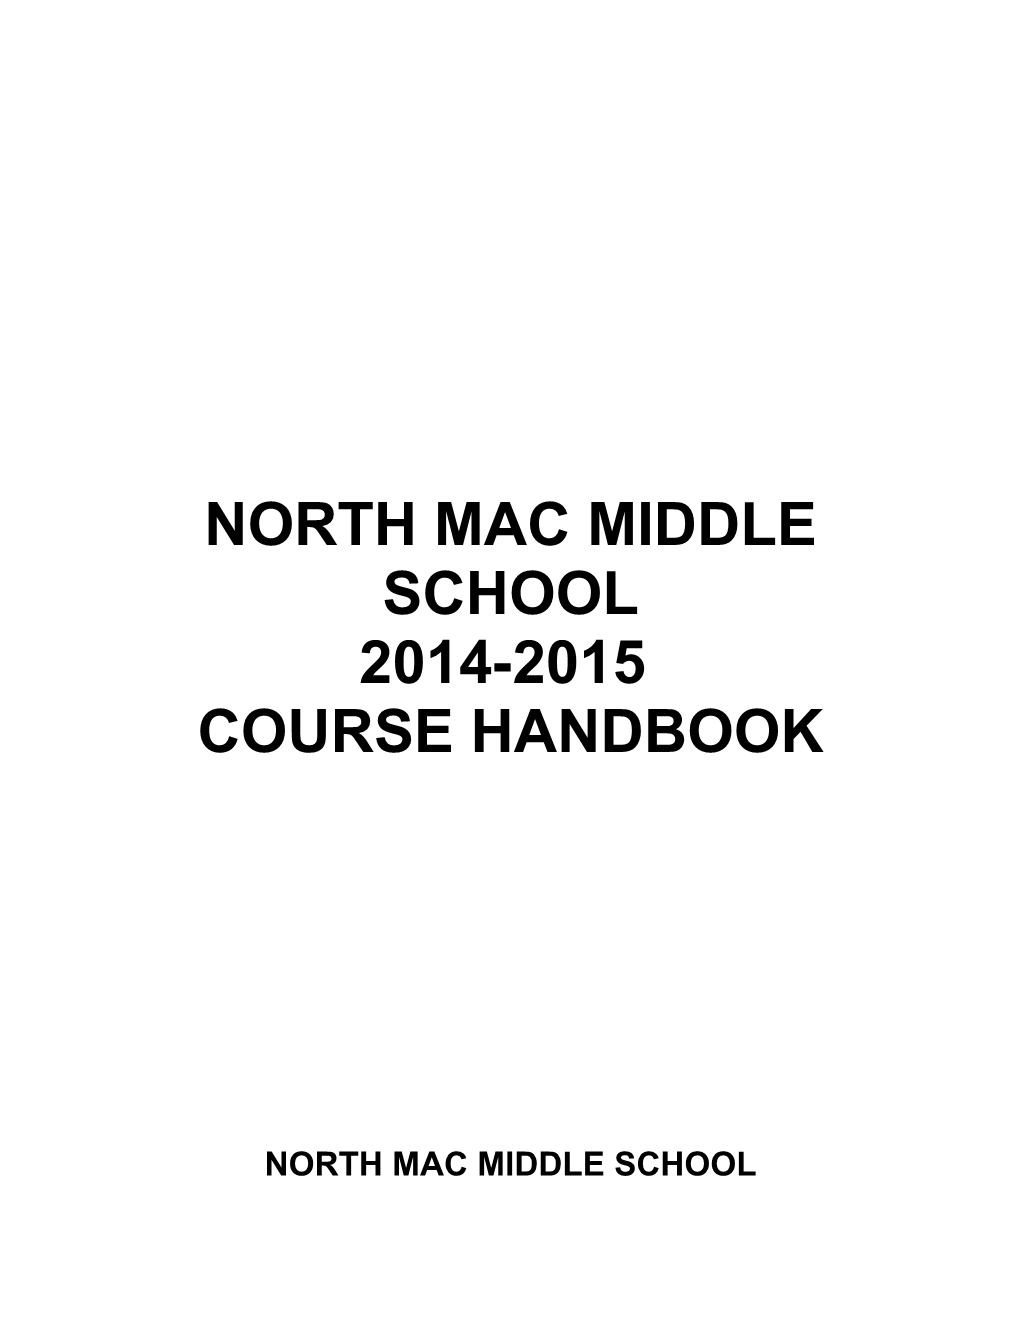 North Mac Middle School